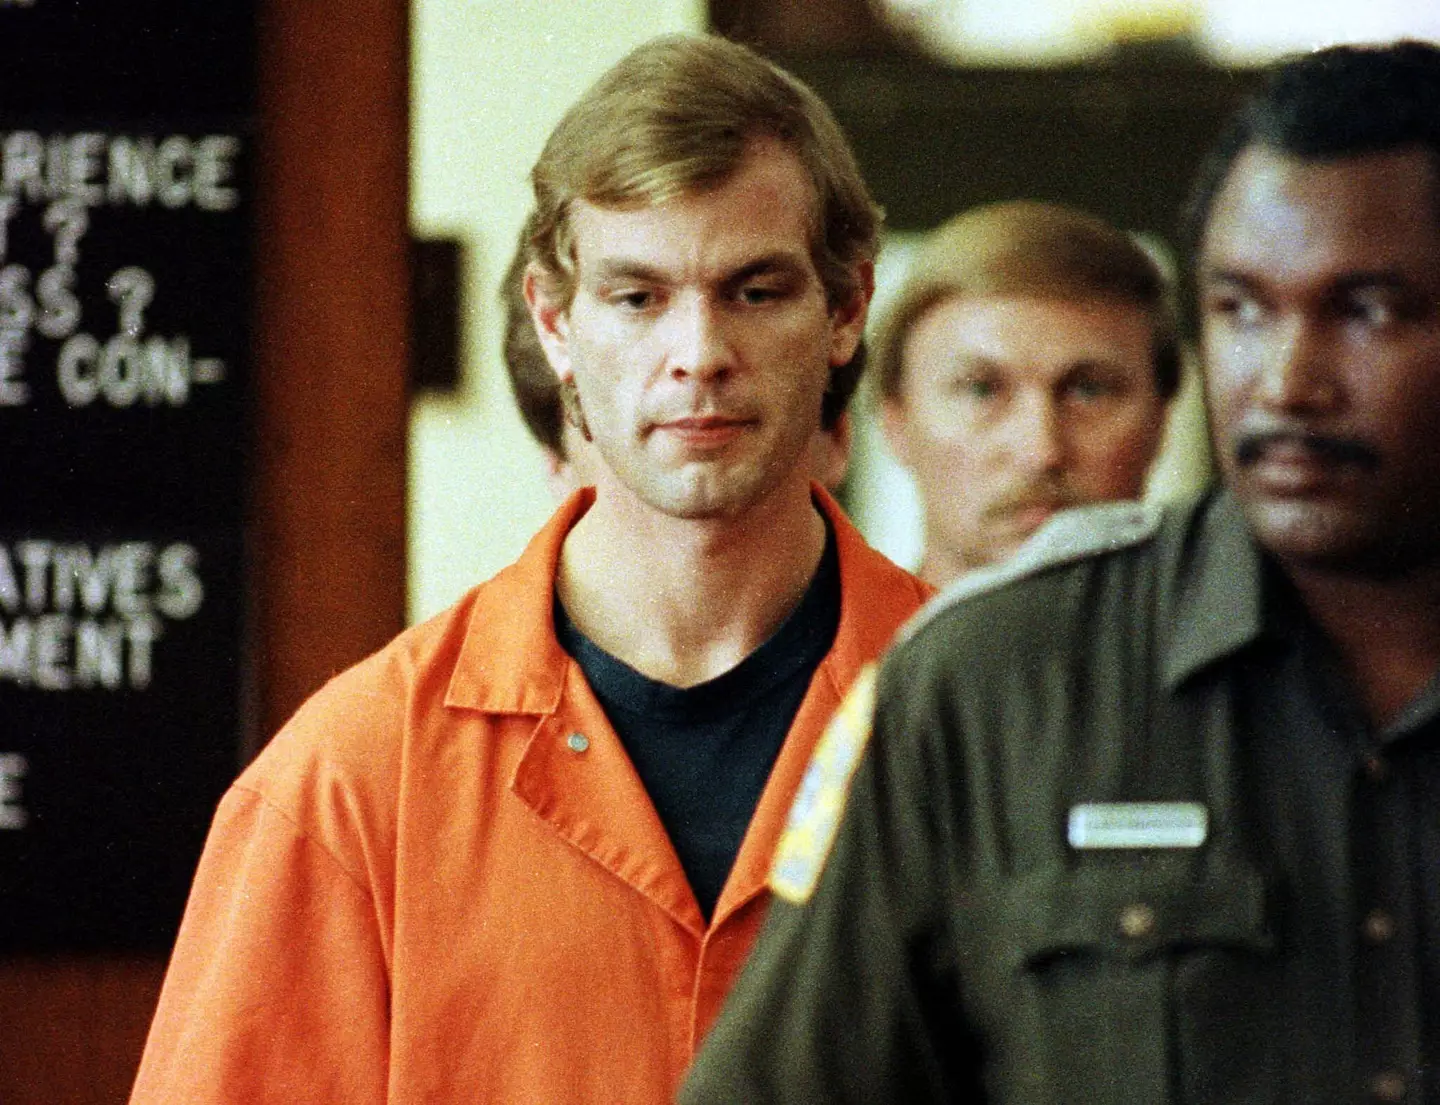 Jeffrey Dahmer murdered 17 people.